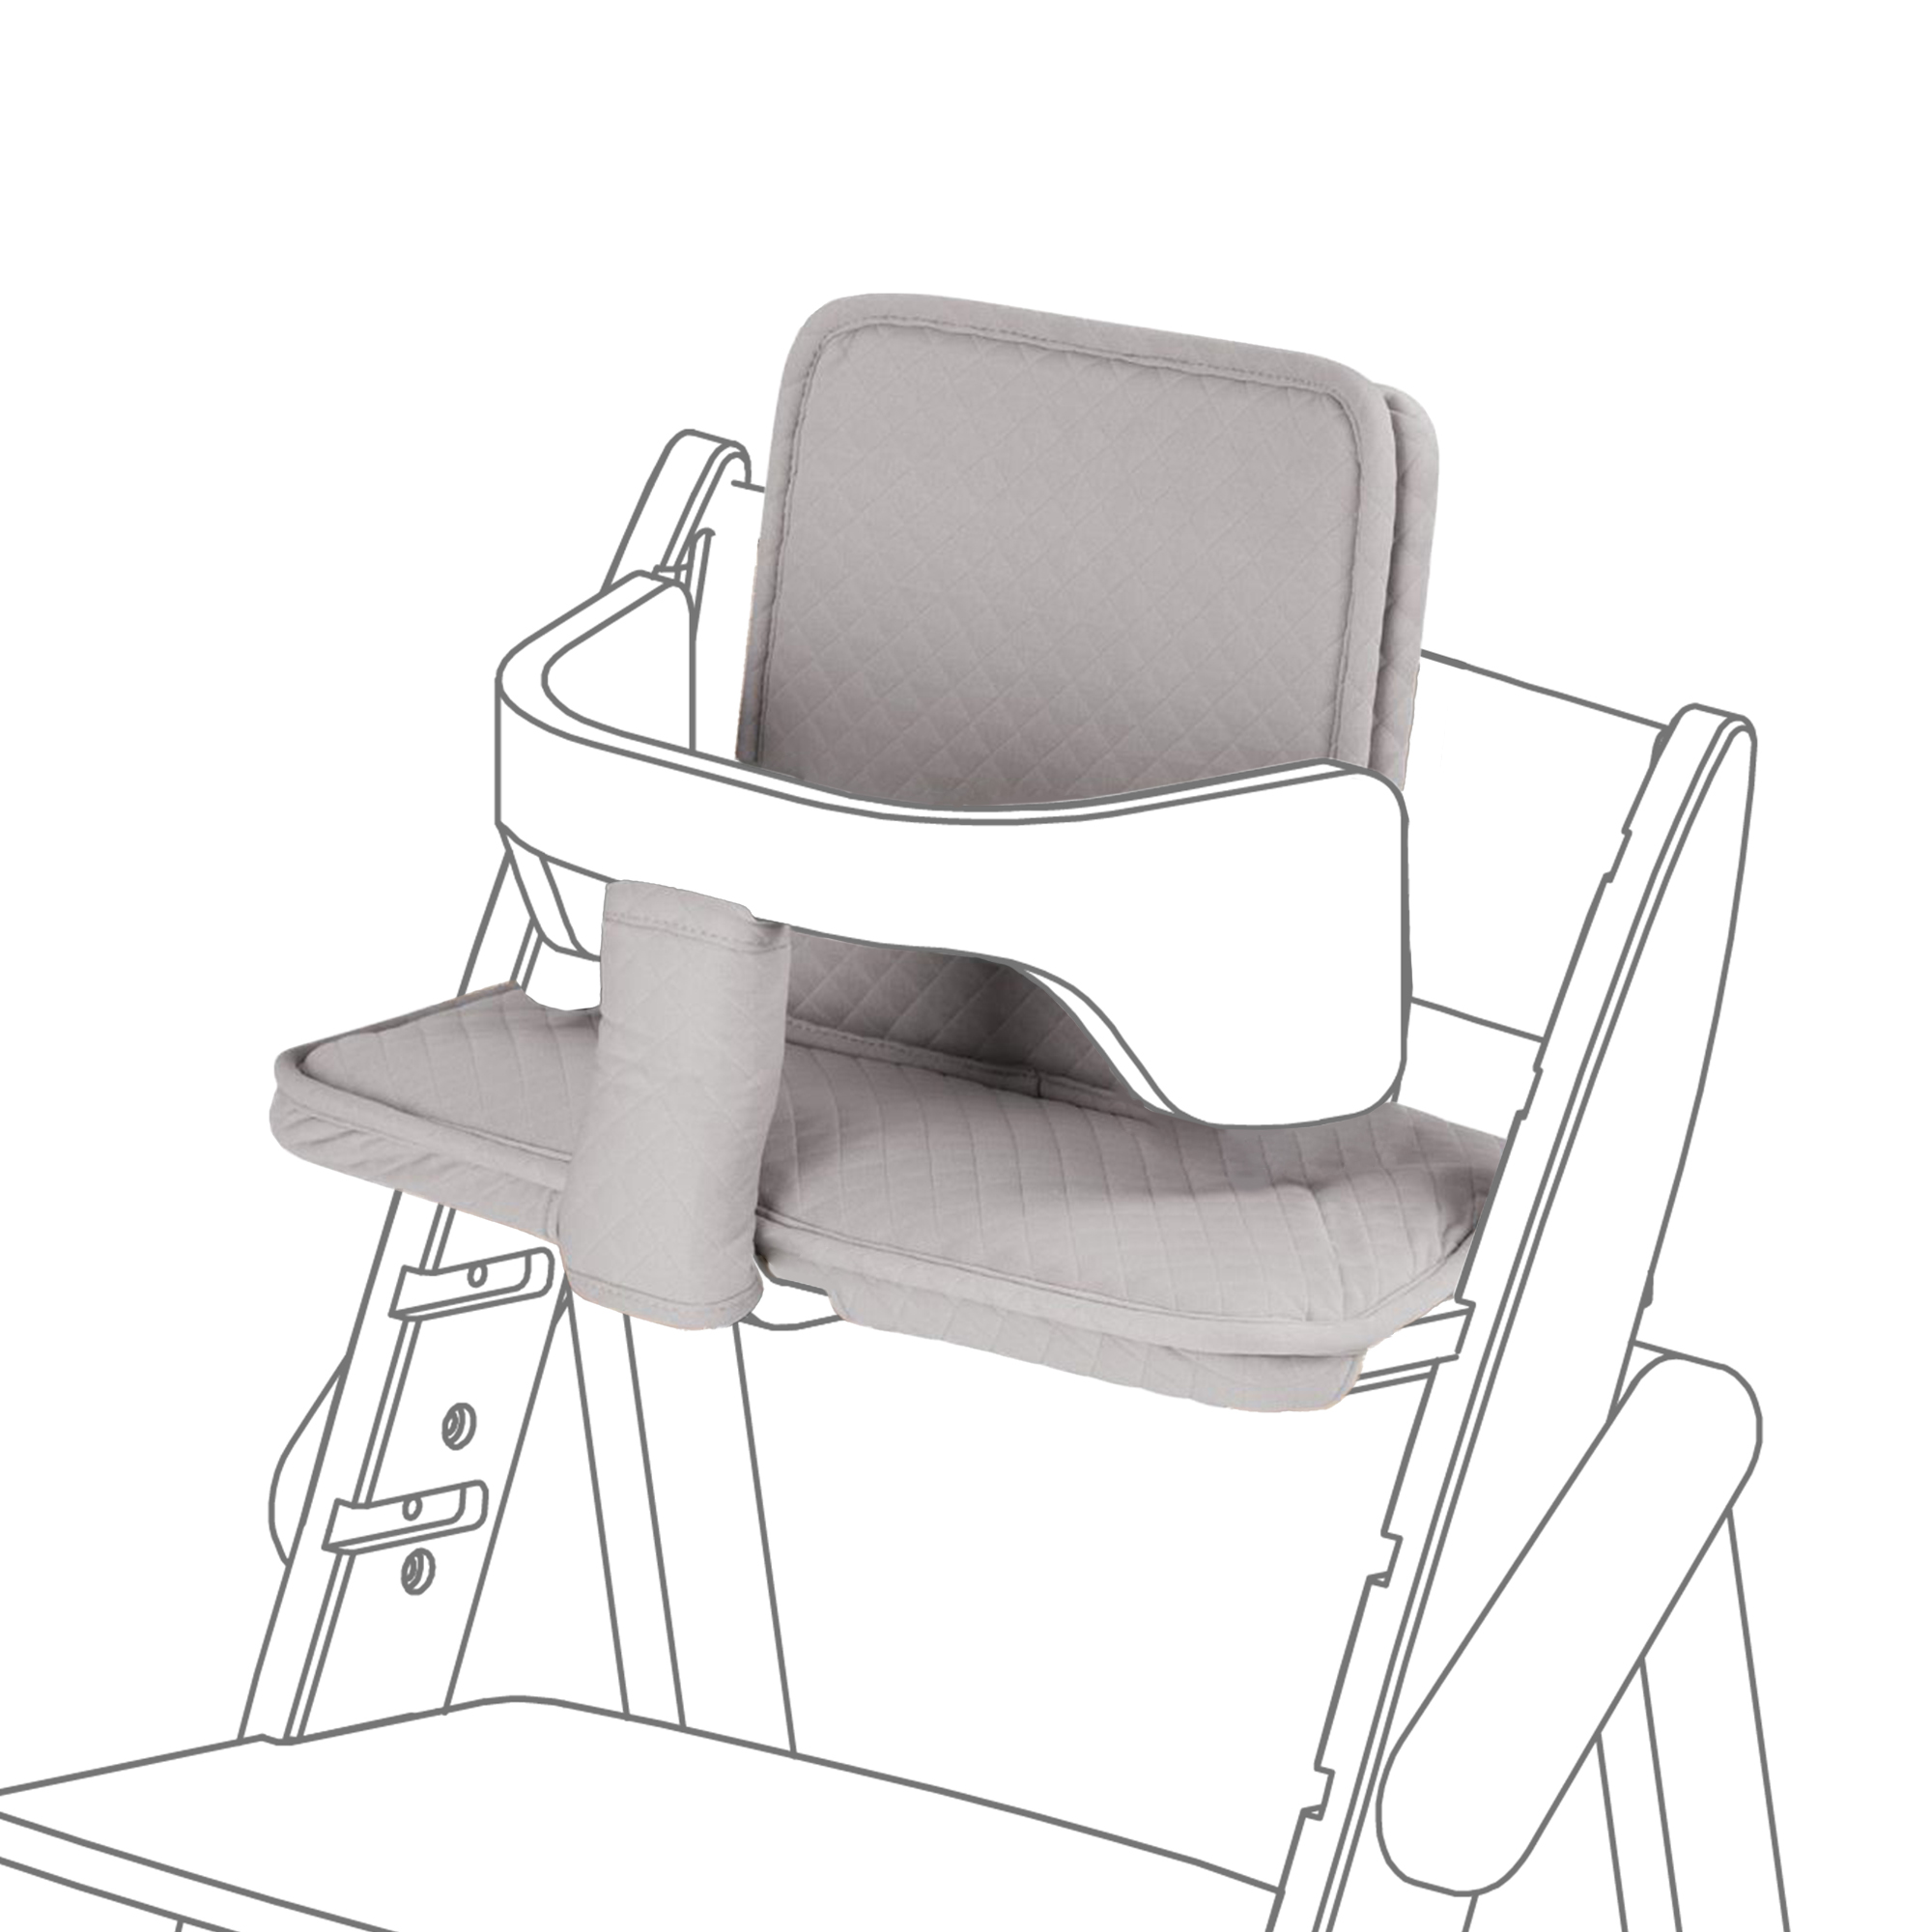 Набор подушек Moji Cushion Set для стульчика Yippy birch 12003342214 столешница moji food tray для крепления на стульчик yippy cloud 12003321601